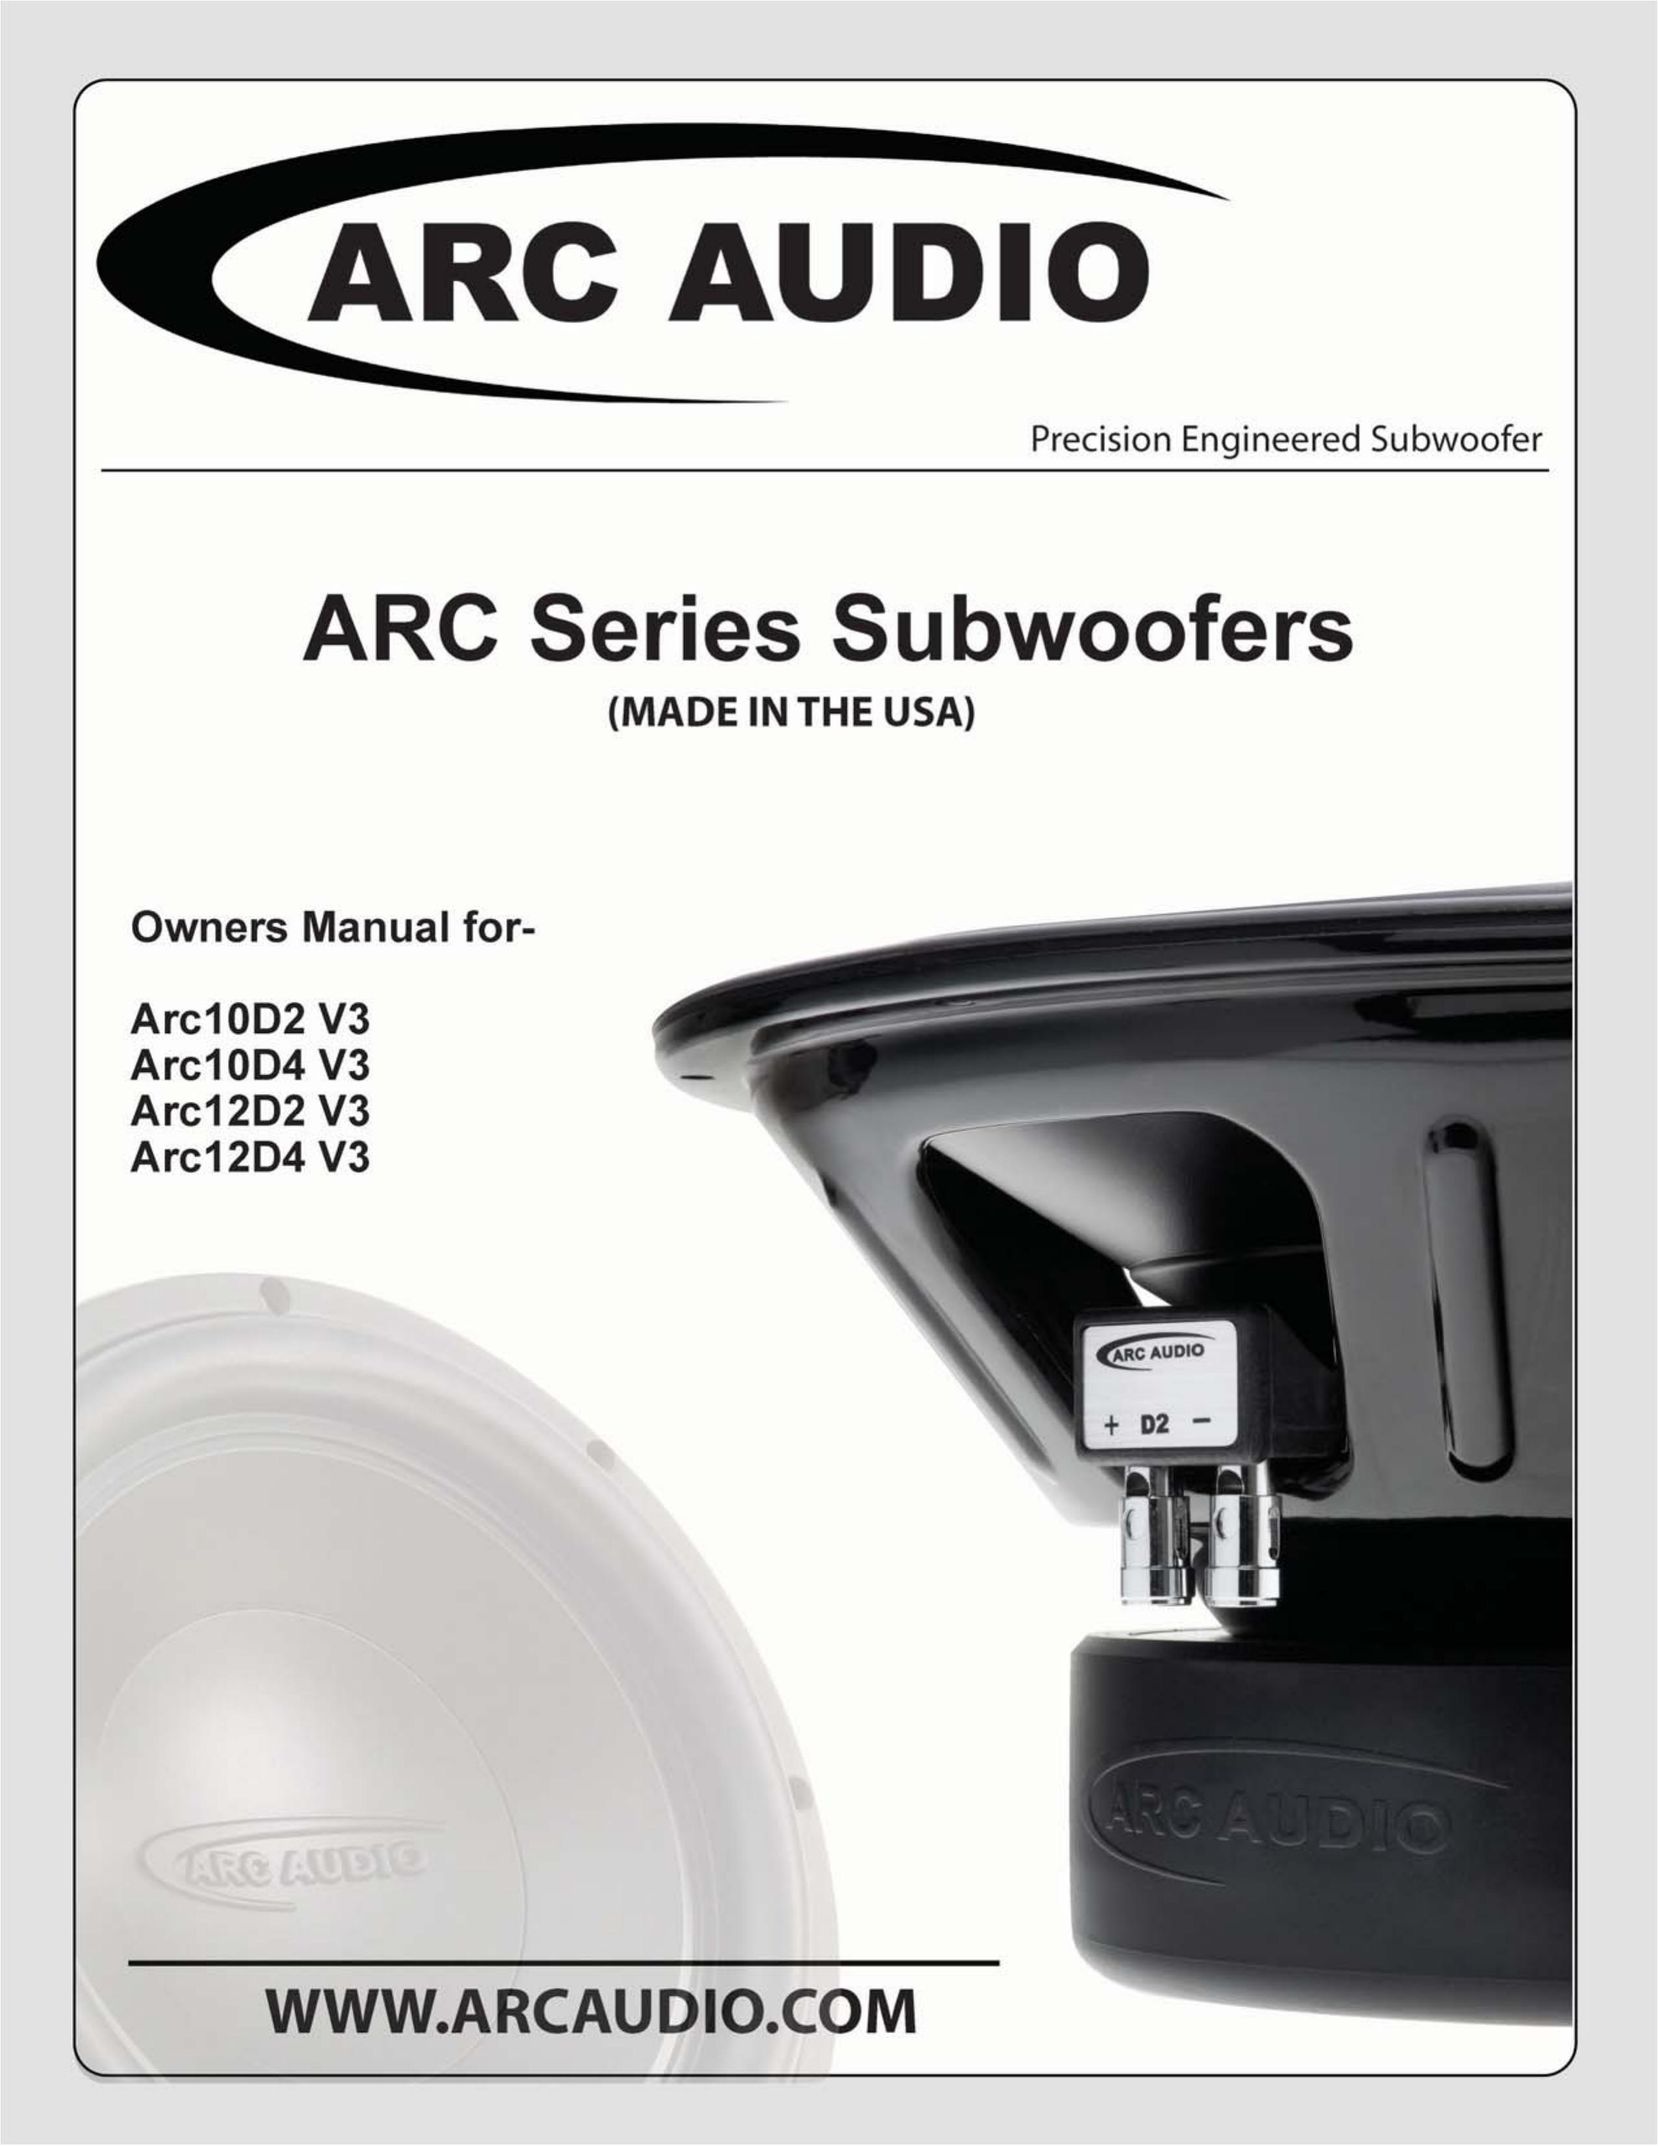 ARC Audio ARC10D2 V3 Speaker User Manual